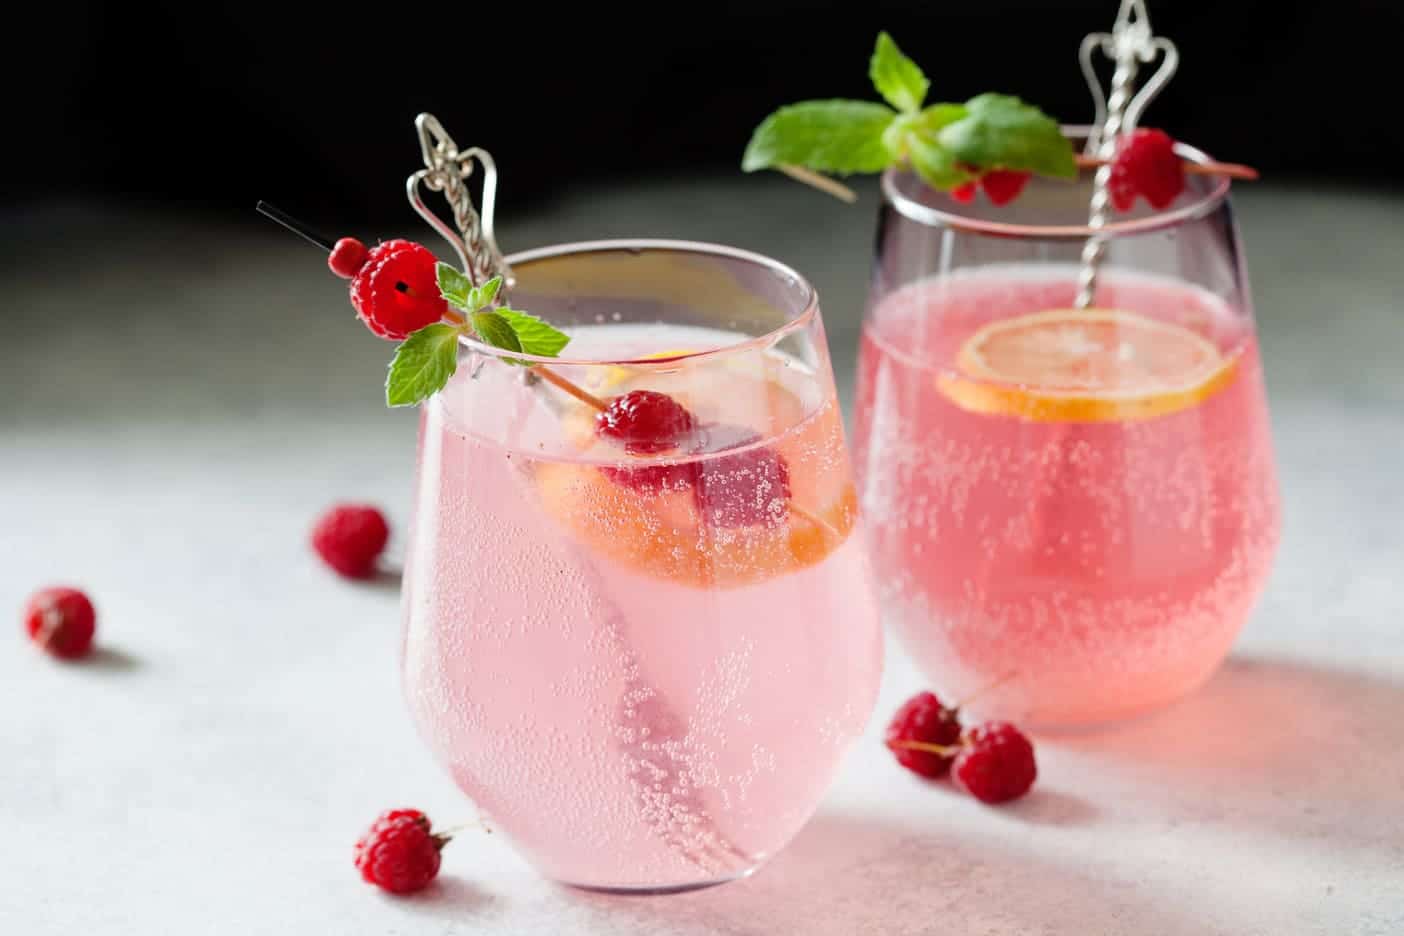 rose lemonade in glasses with raspberry garnish